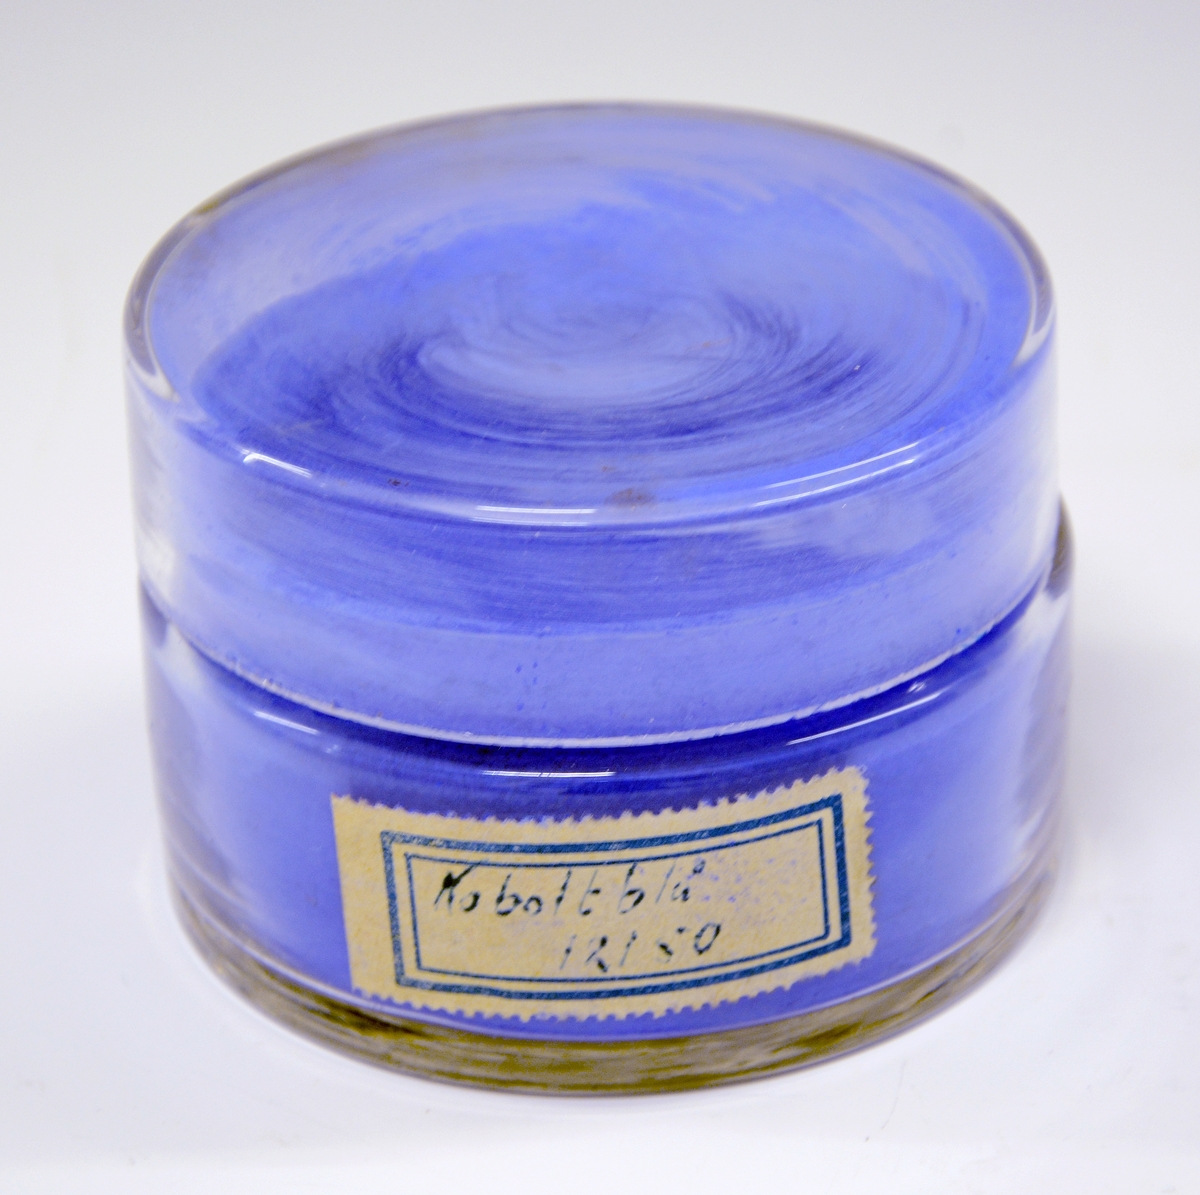 Krukke med lokk i glass. Beholder til fargepulver  brukt i dekoravdelingen ved PP. Fylt med koboltblått fargepulver.